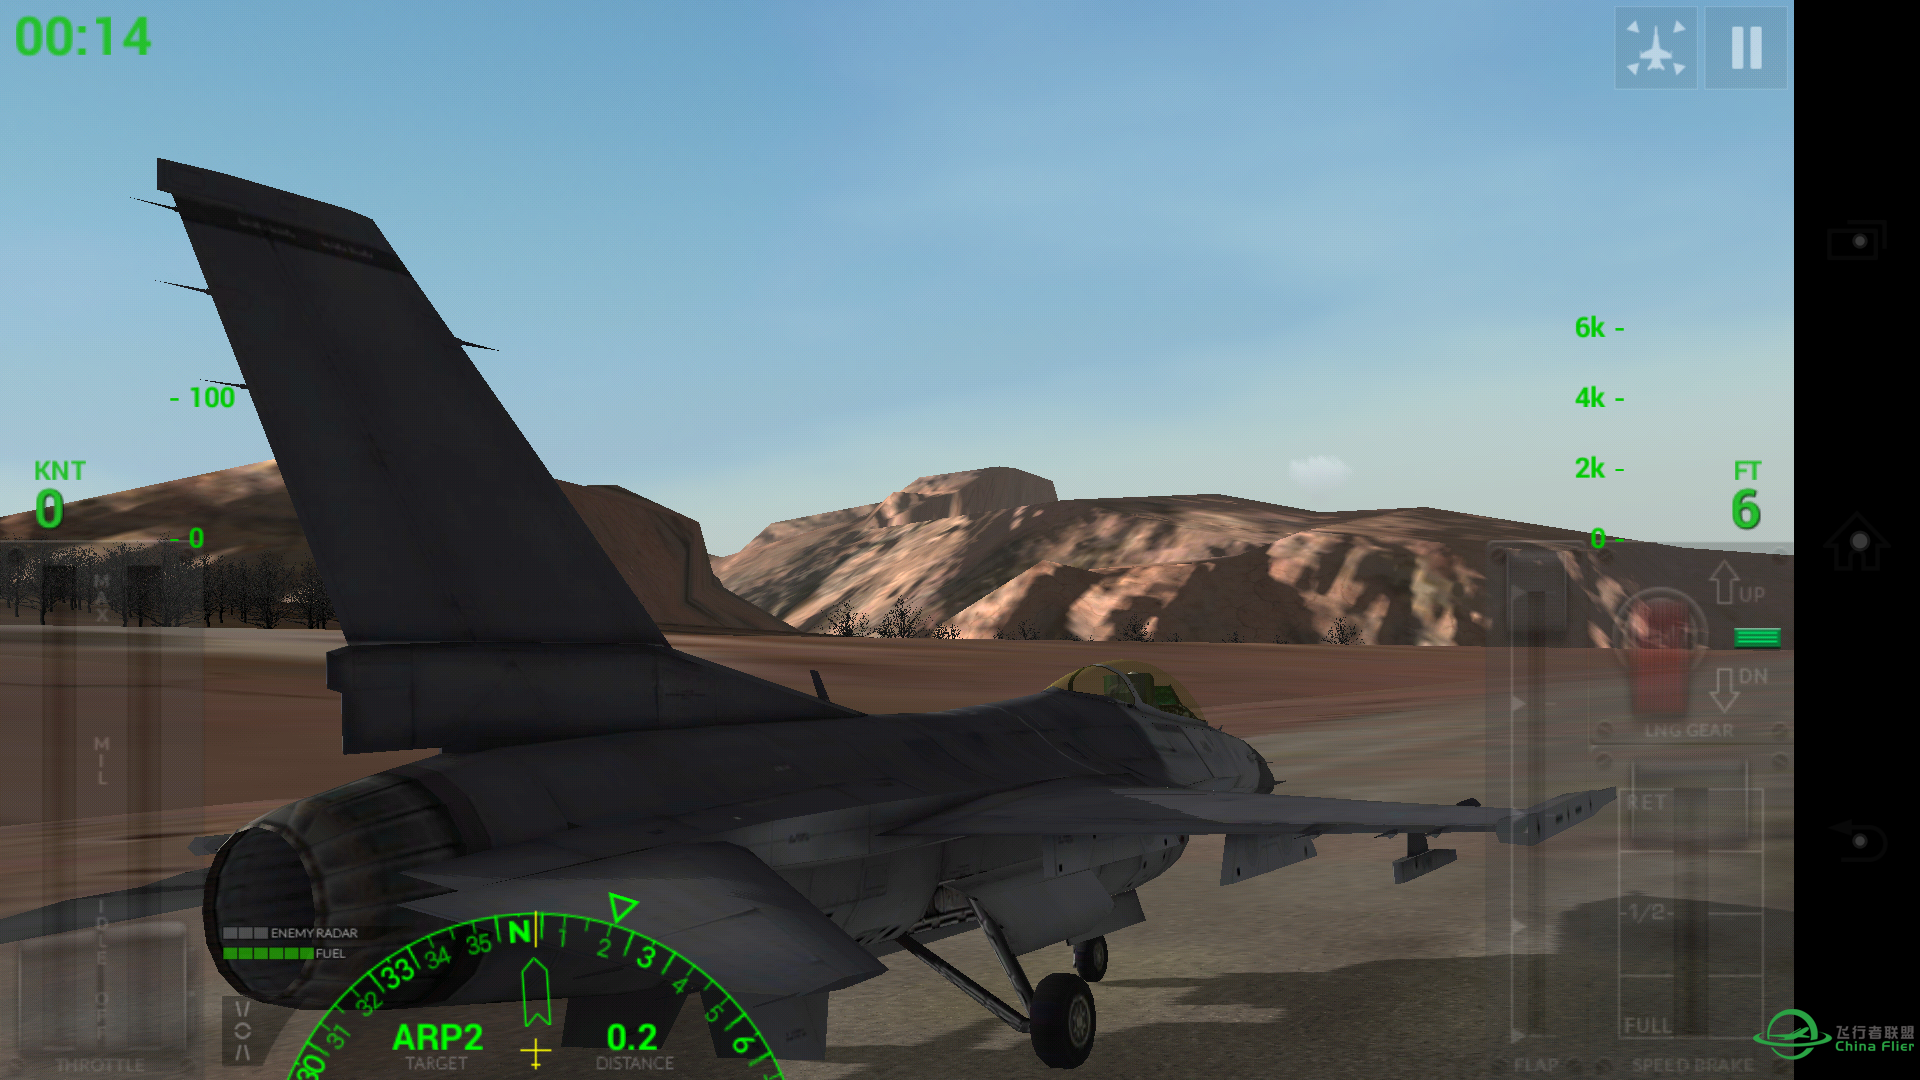 [截图而已]F18 Carrier Landing2 Pro-1263 